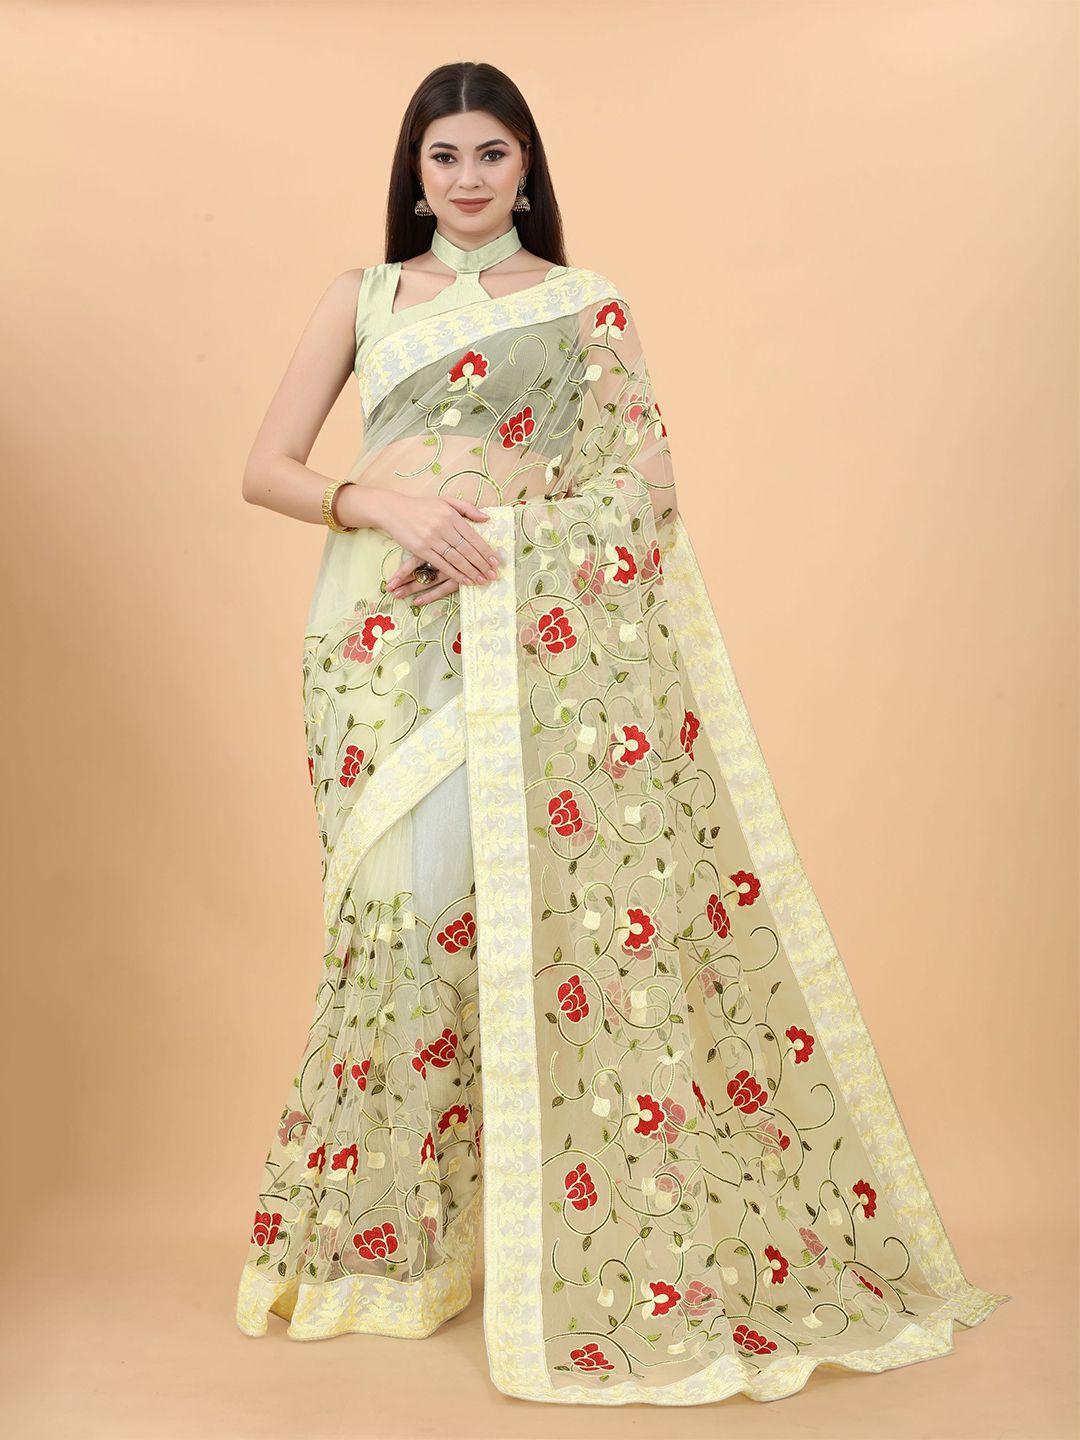 vairagee floral embroidered net saree